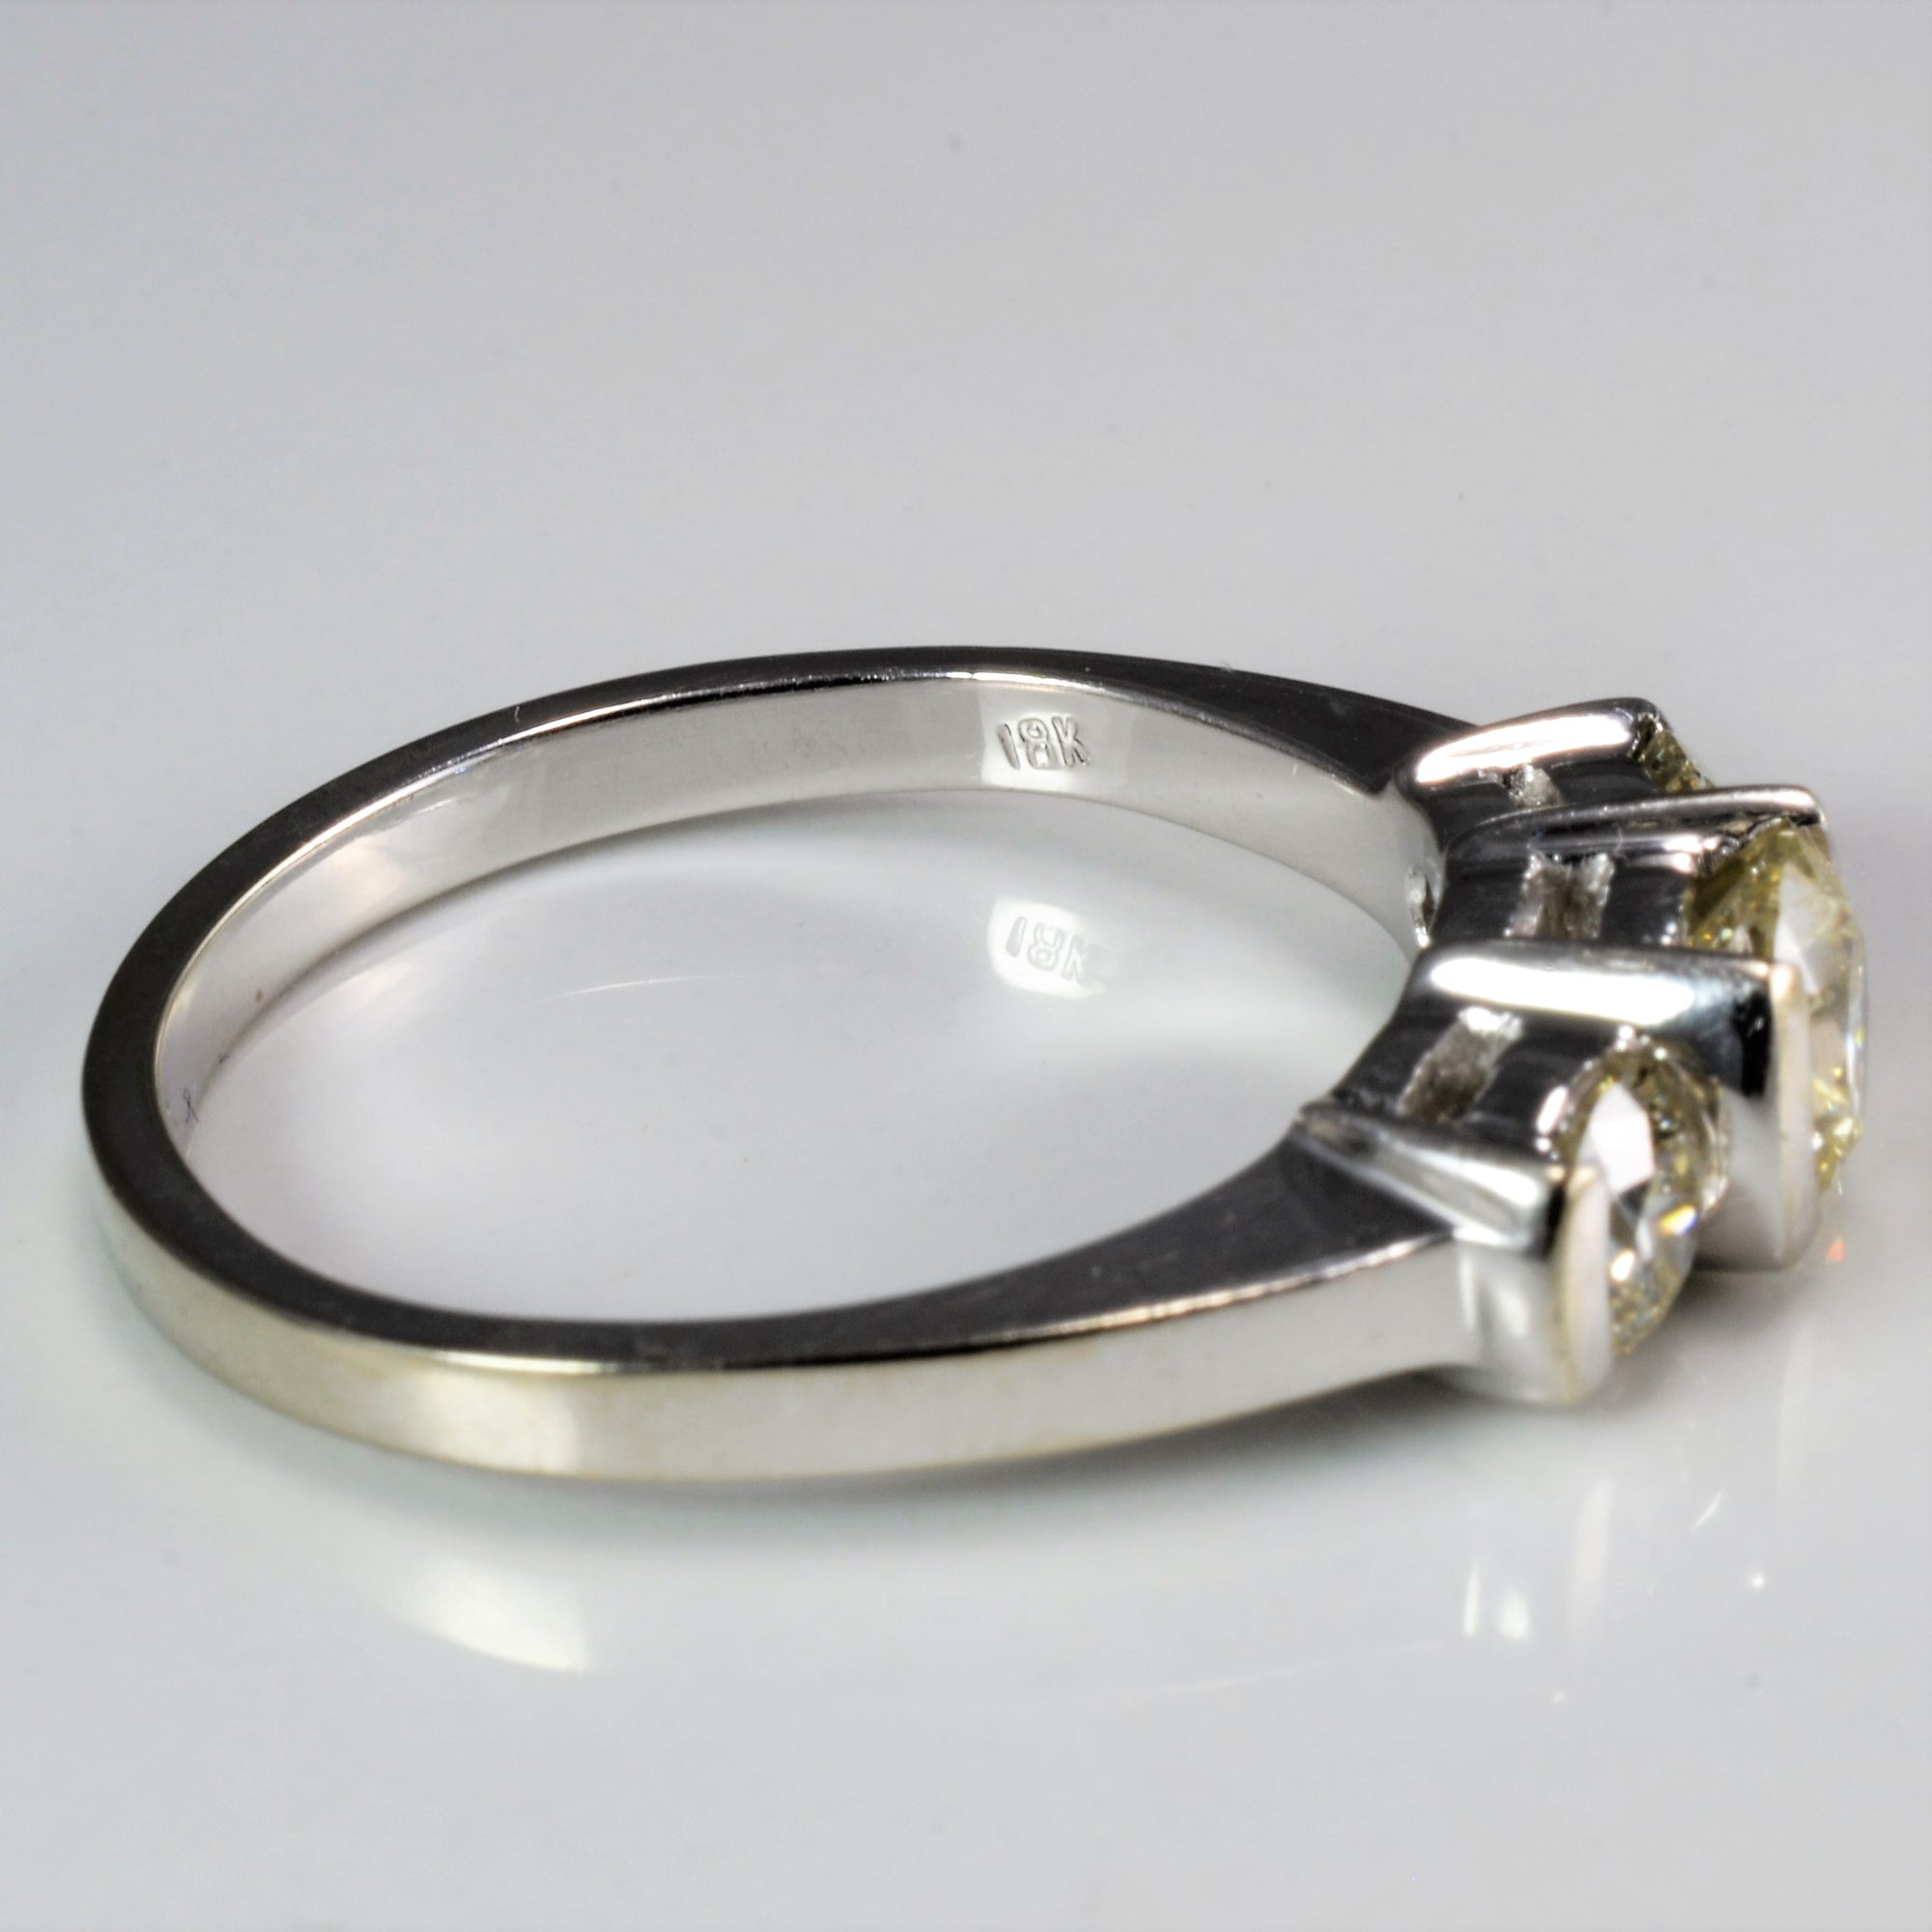 Three Stone Canadian Diamond Engagement Ring | 1.51 ctw, SZ 8.75 |